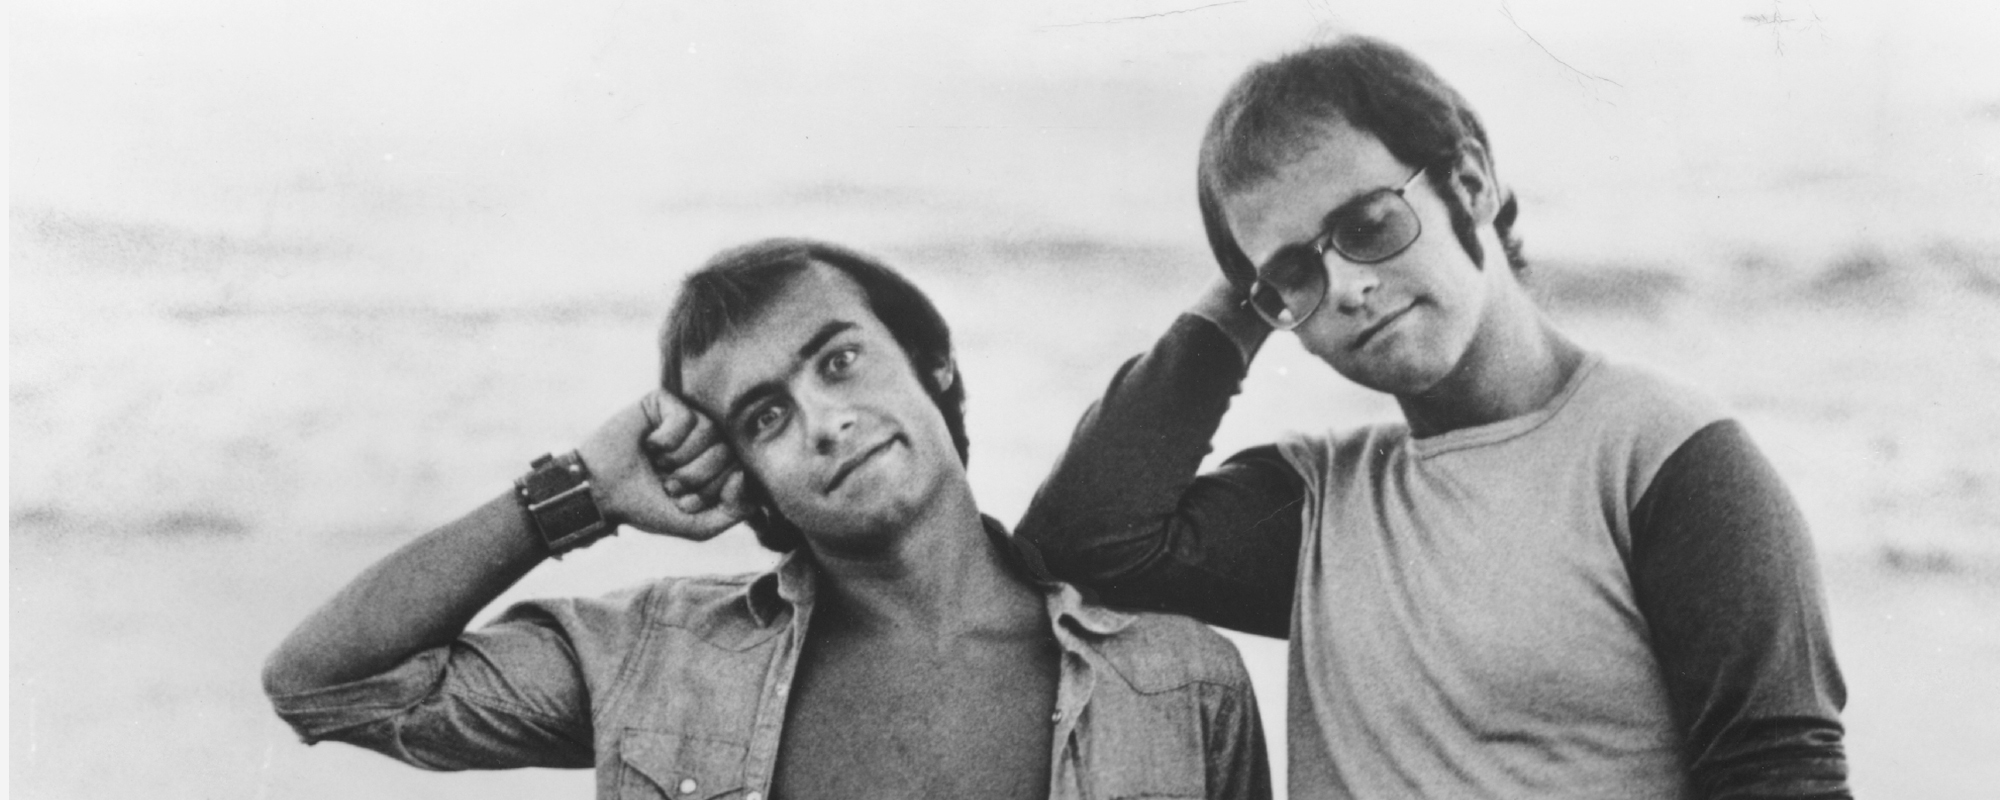 Bernie Taupin Tells Elton John True Inspiration Behind “Rocket Man”: “I Never Knew That”